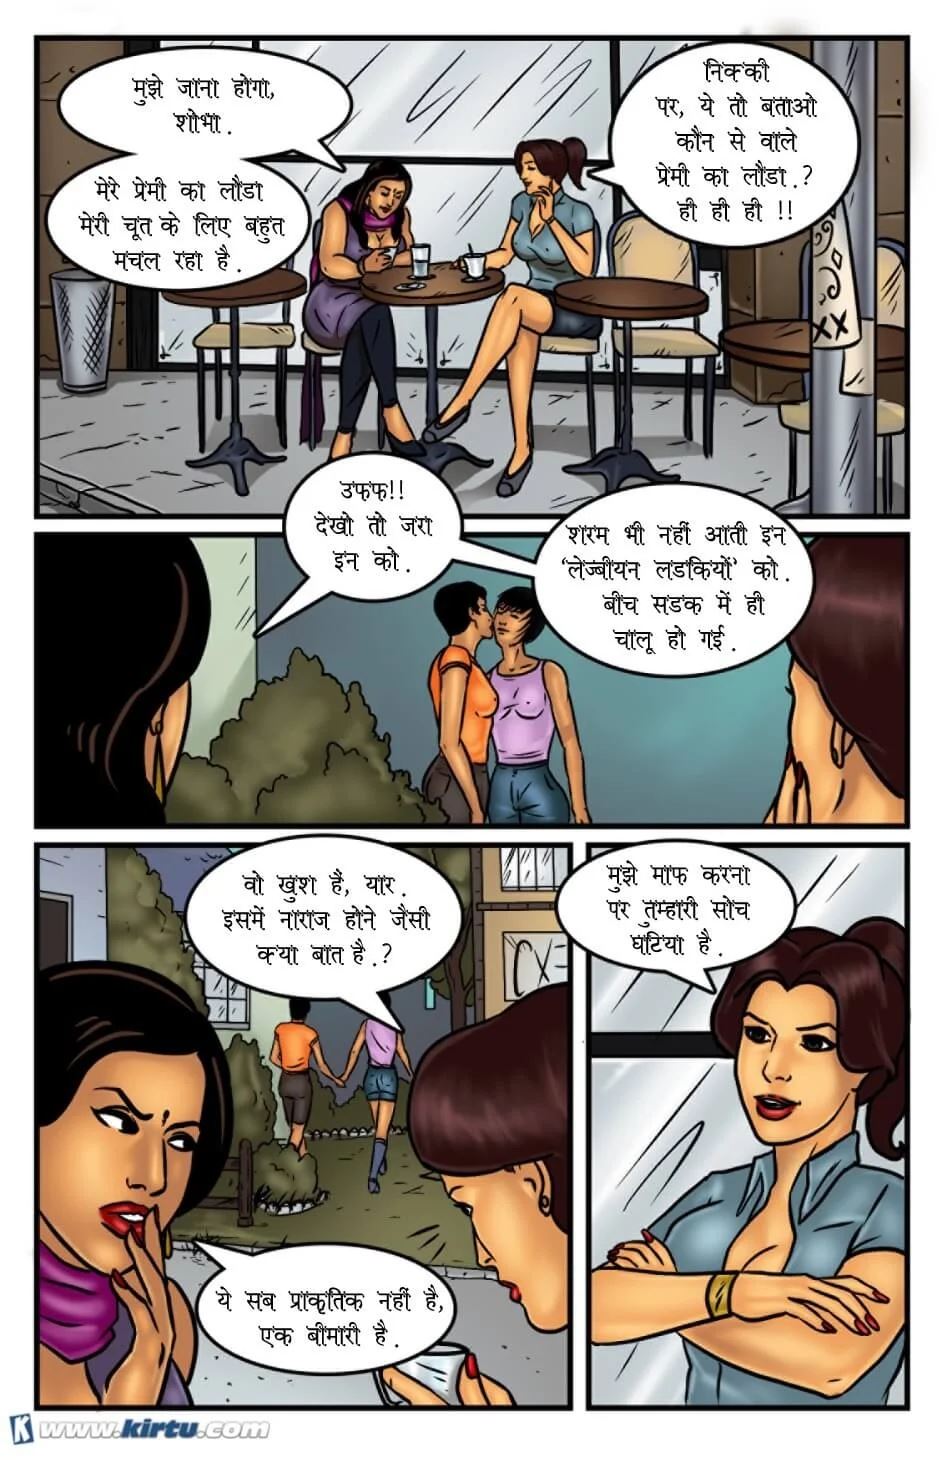 Free porn comics hindi